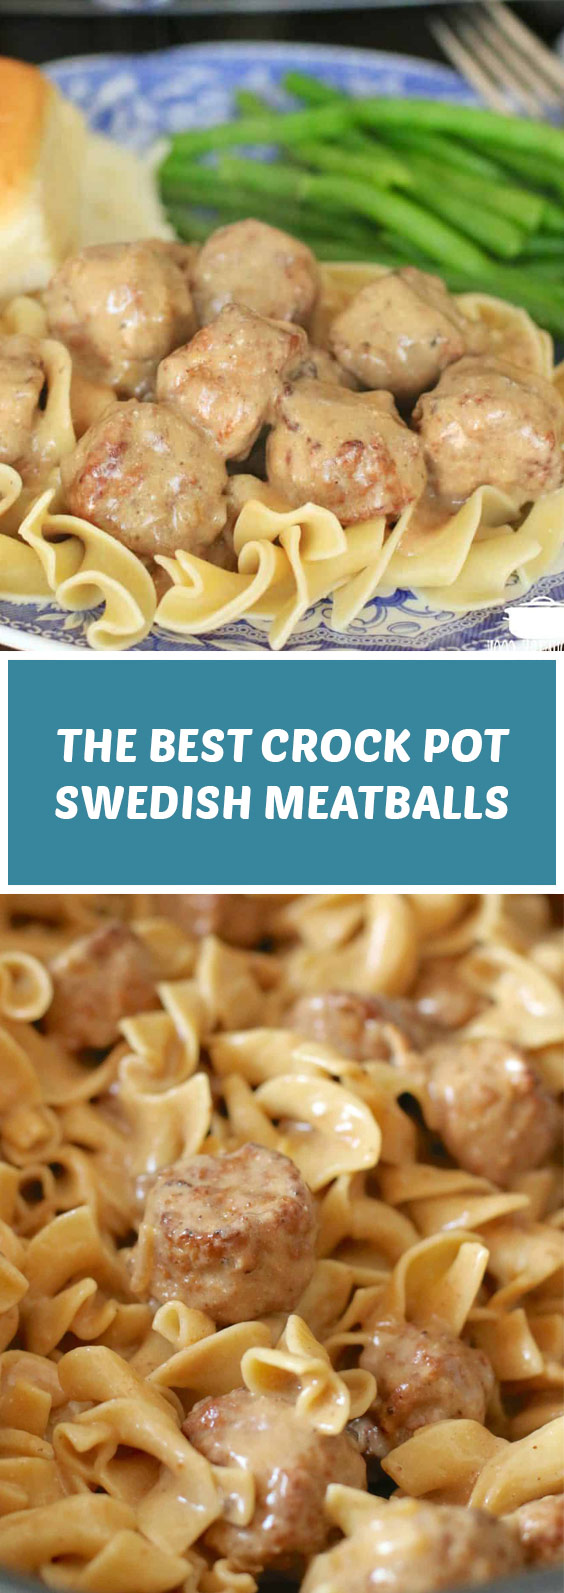 The Best Crock Pot Swedish Meatballs #crockpot #meatballs